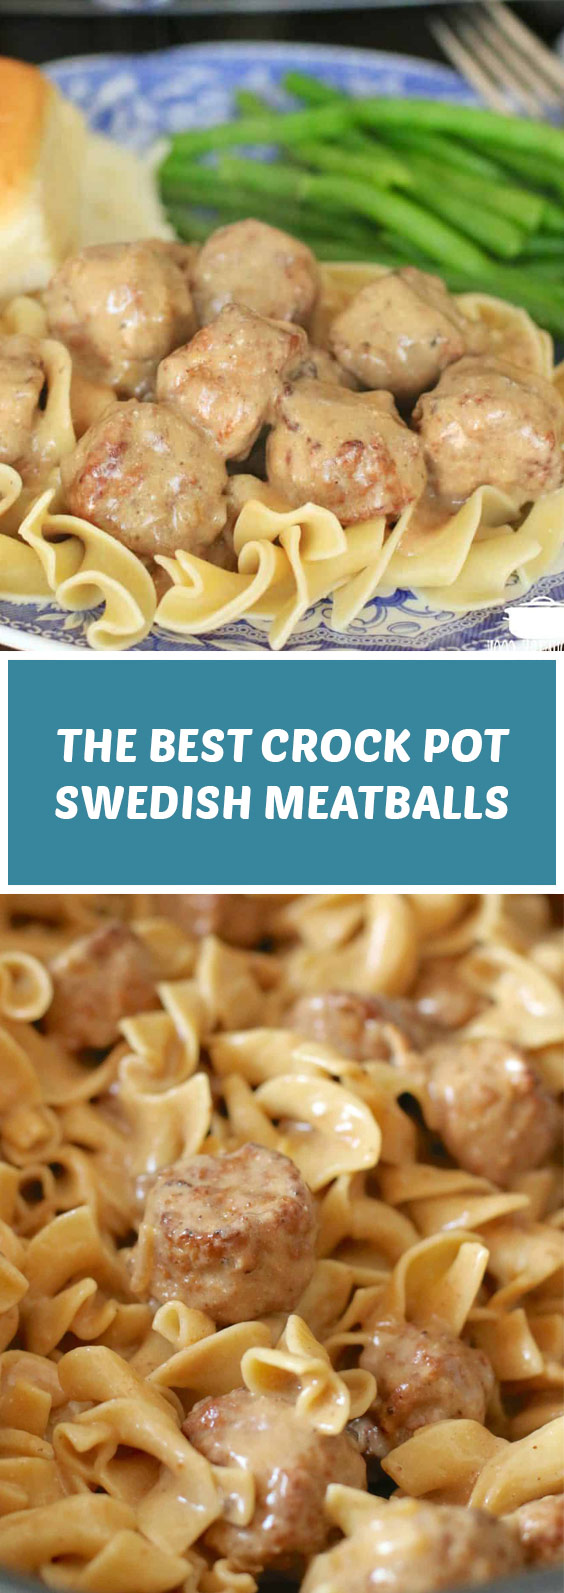 The Best Crock Pot Swedish Meatballs #crockpot #meatballs